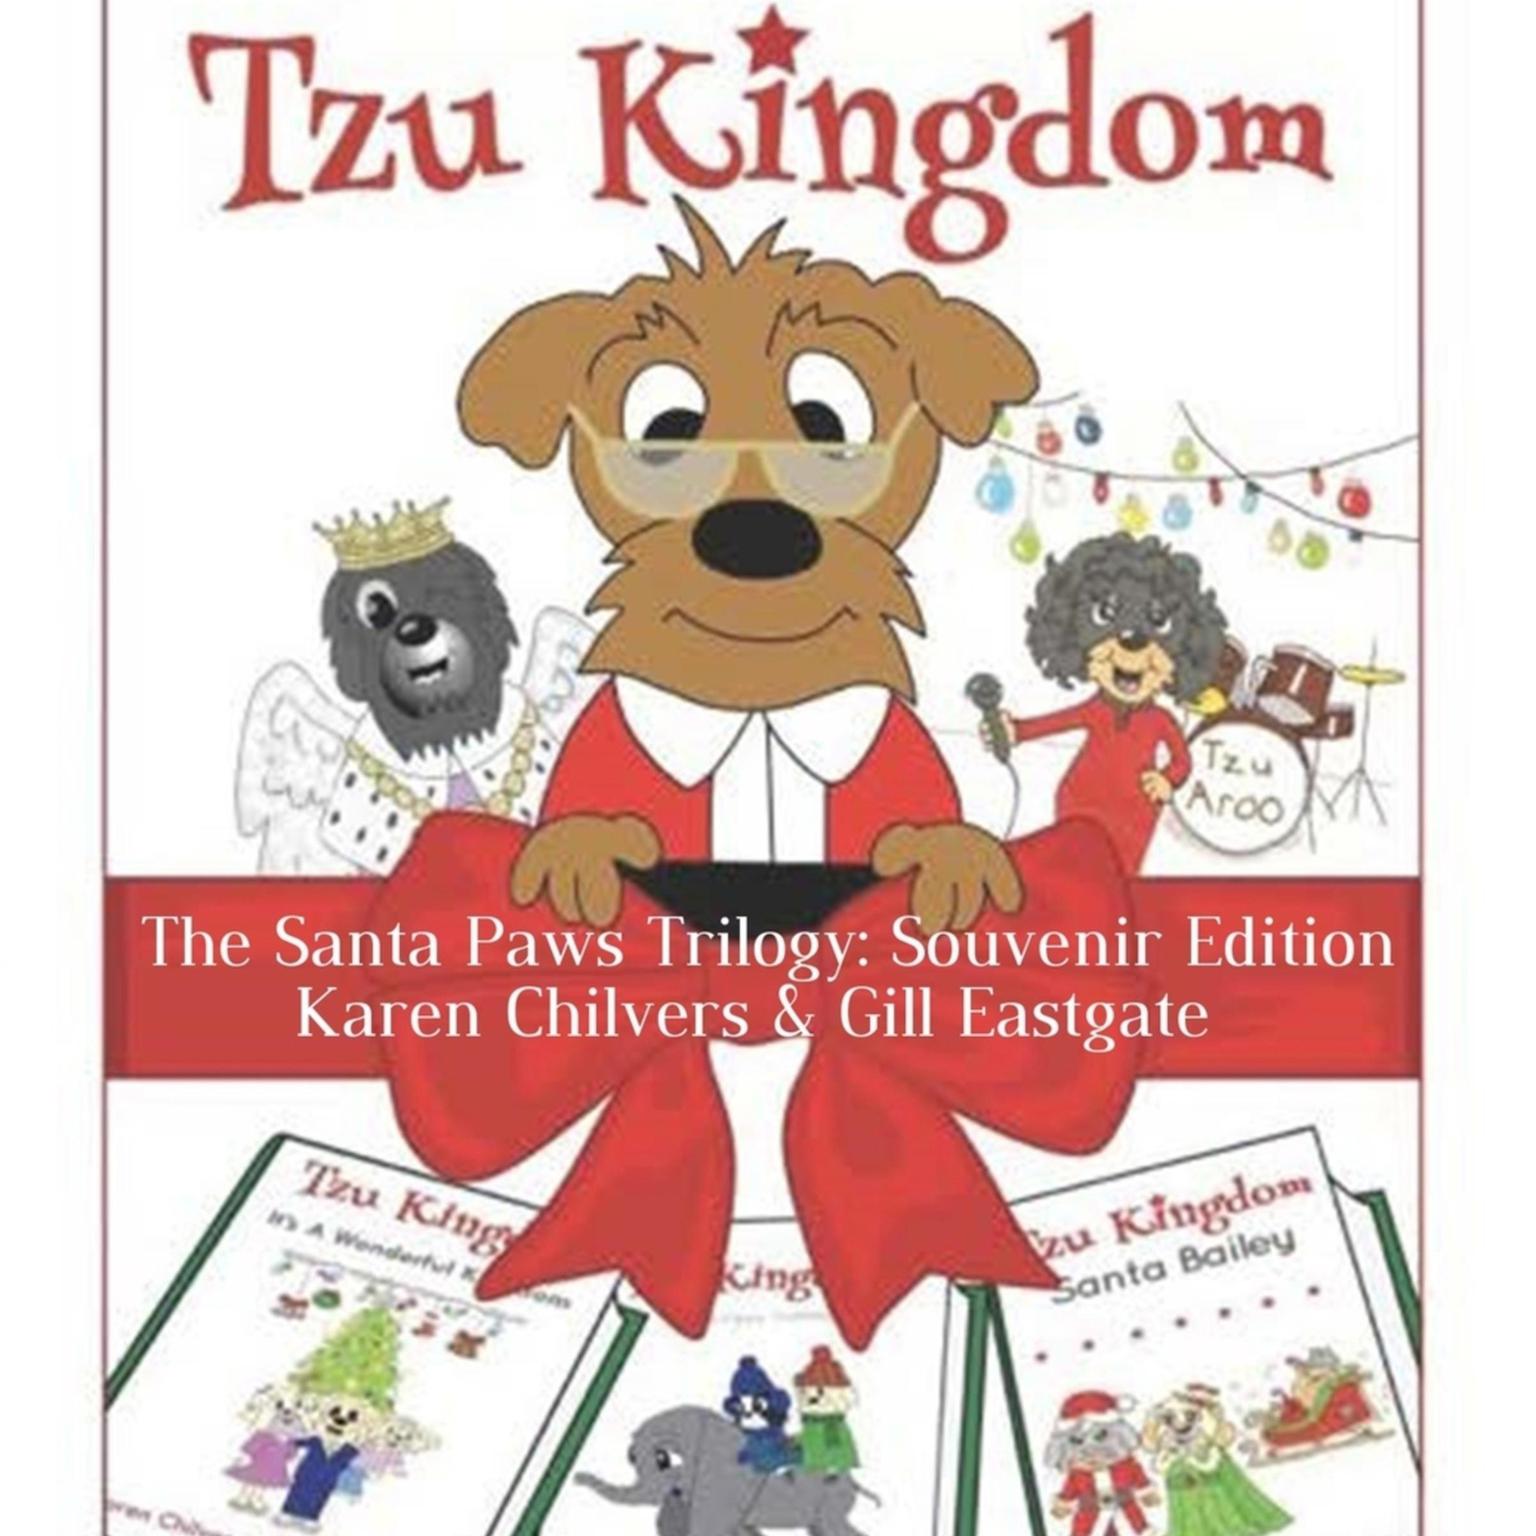 The Santa Paws Trilogy: Souvenir Edition (Tzu Kingdom) (Abridged) Audiobook, by Gill Eastgate